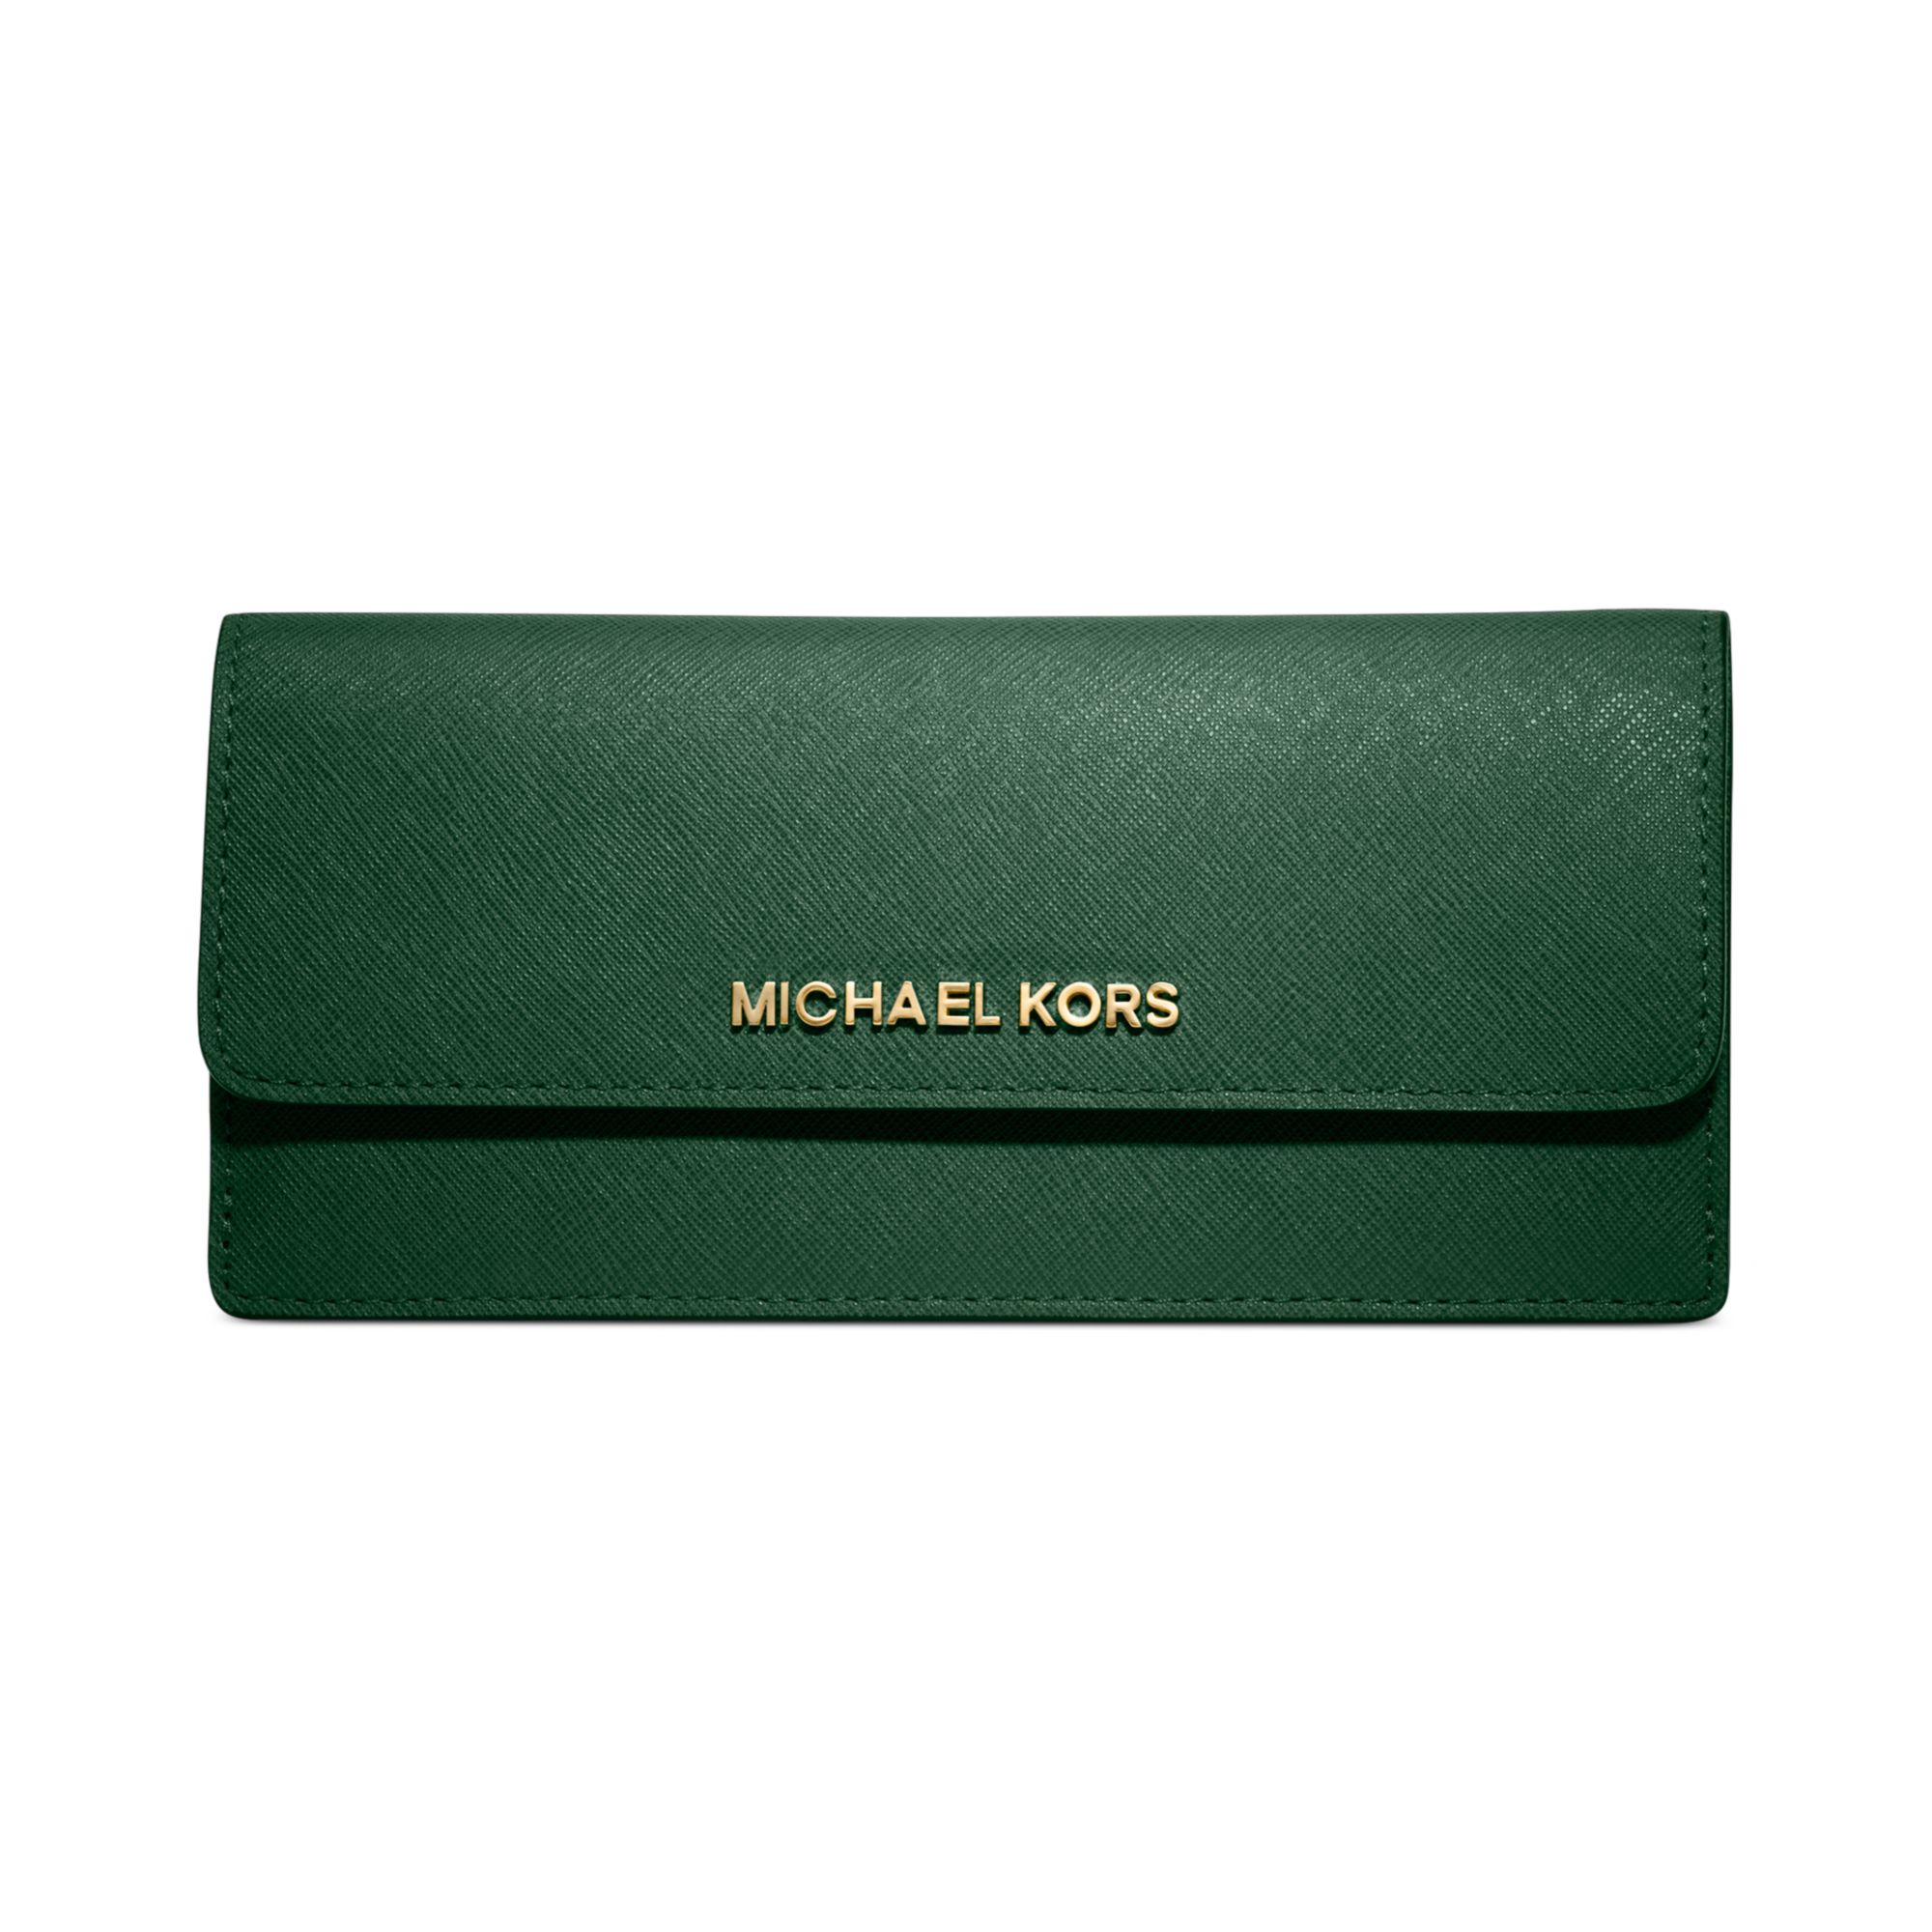 Michael Kors Jet Set Travel Wallet in Malachite (Green) | Lyst